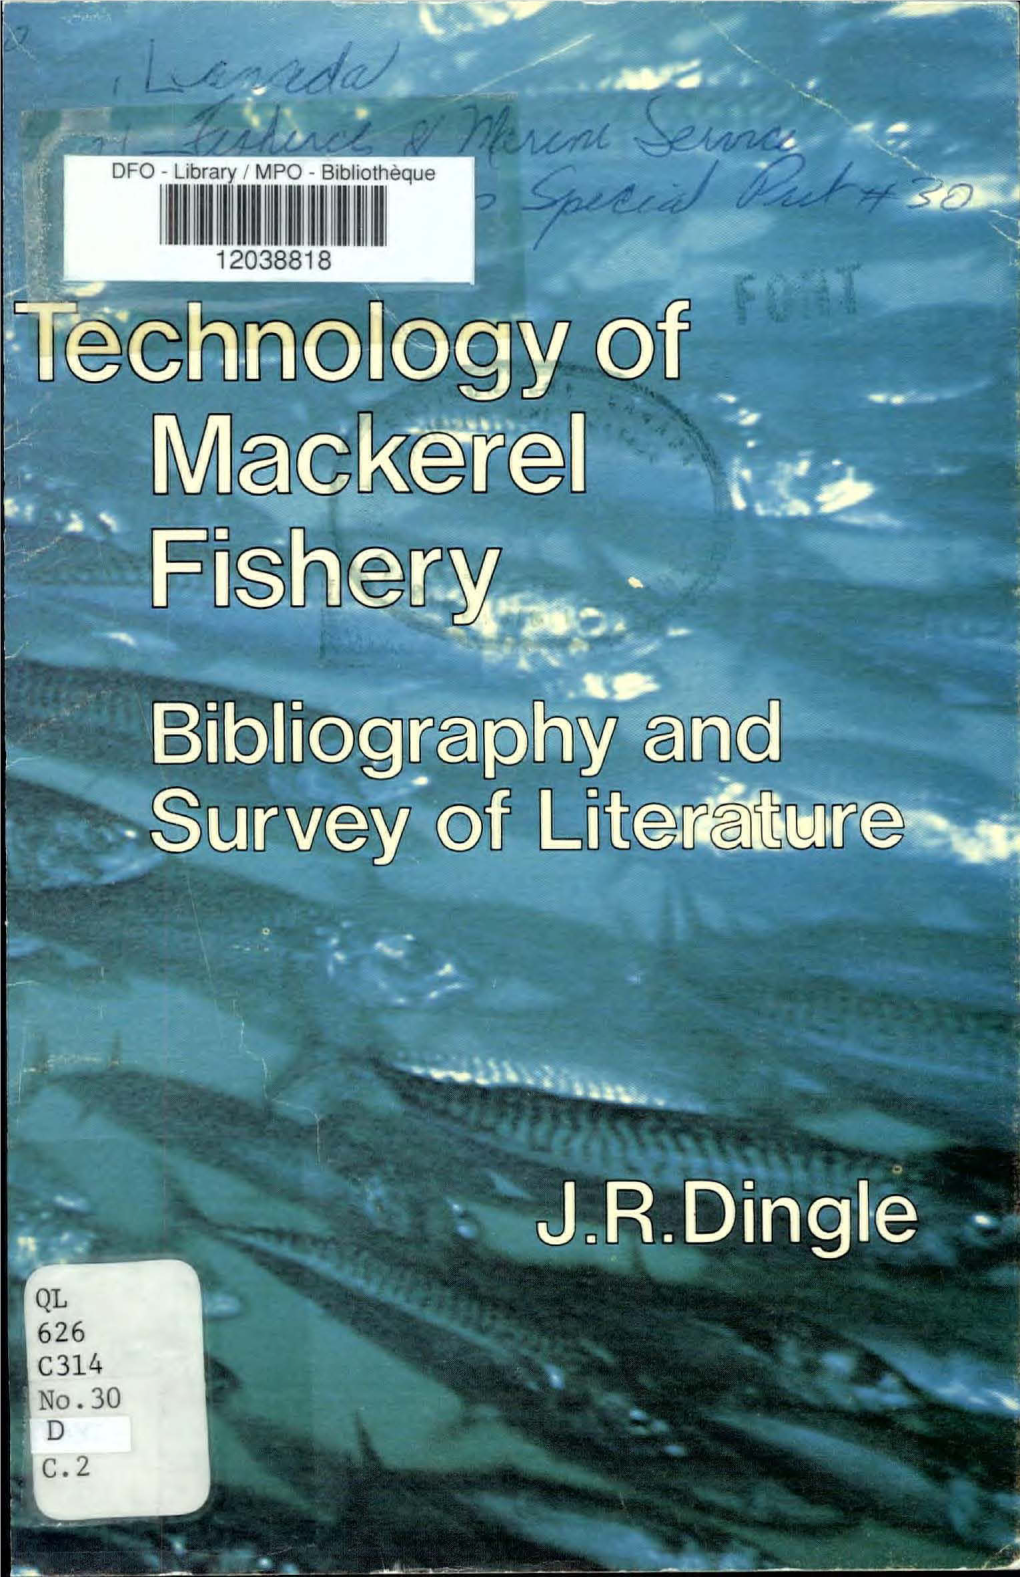 Technology of Mackerel Fishery